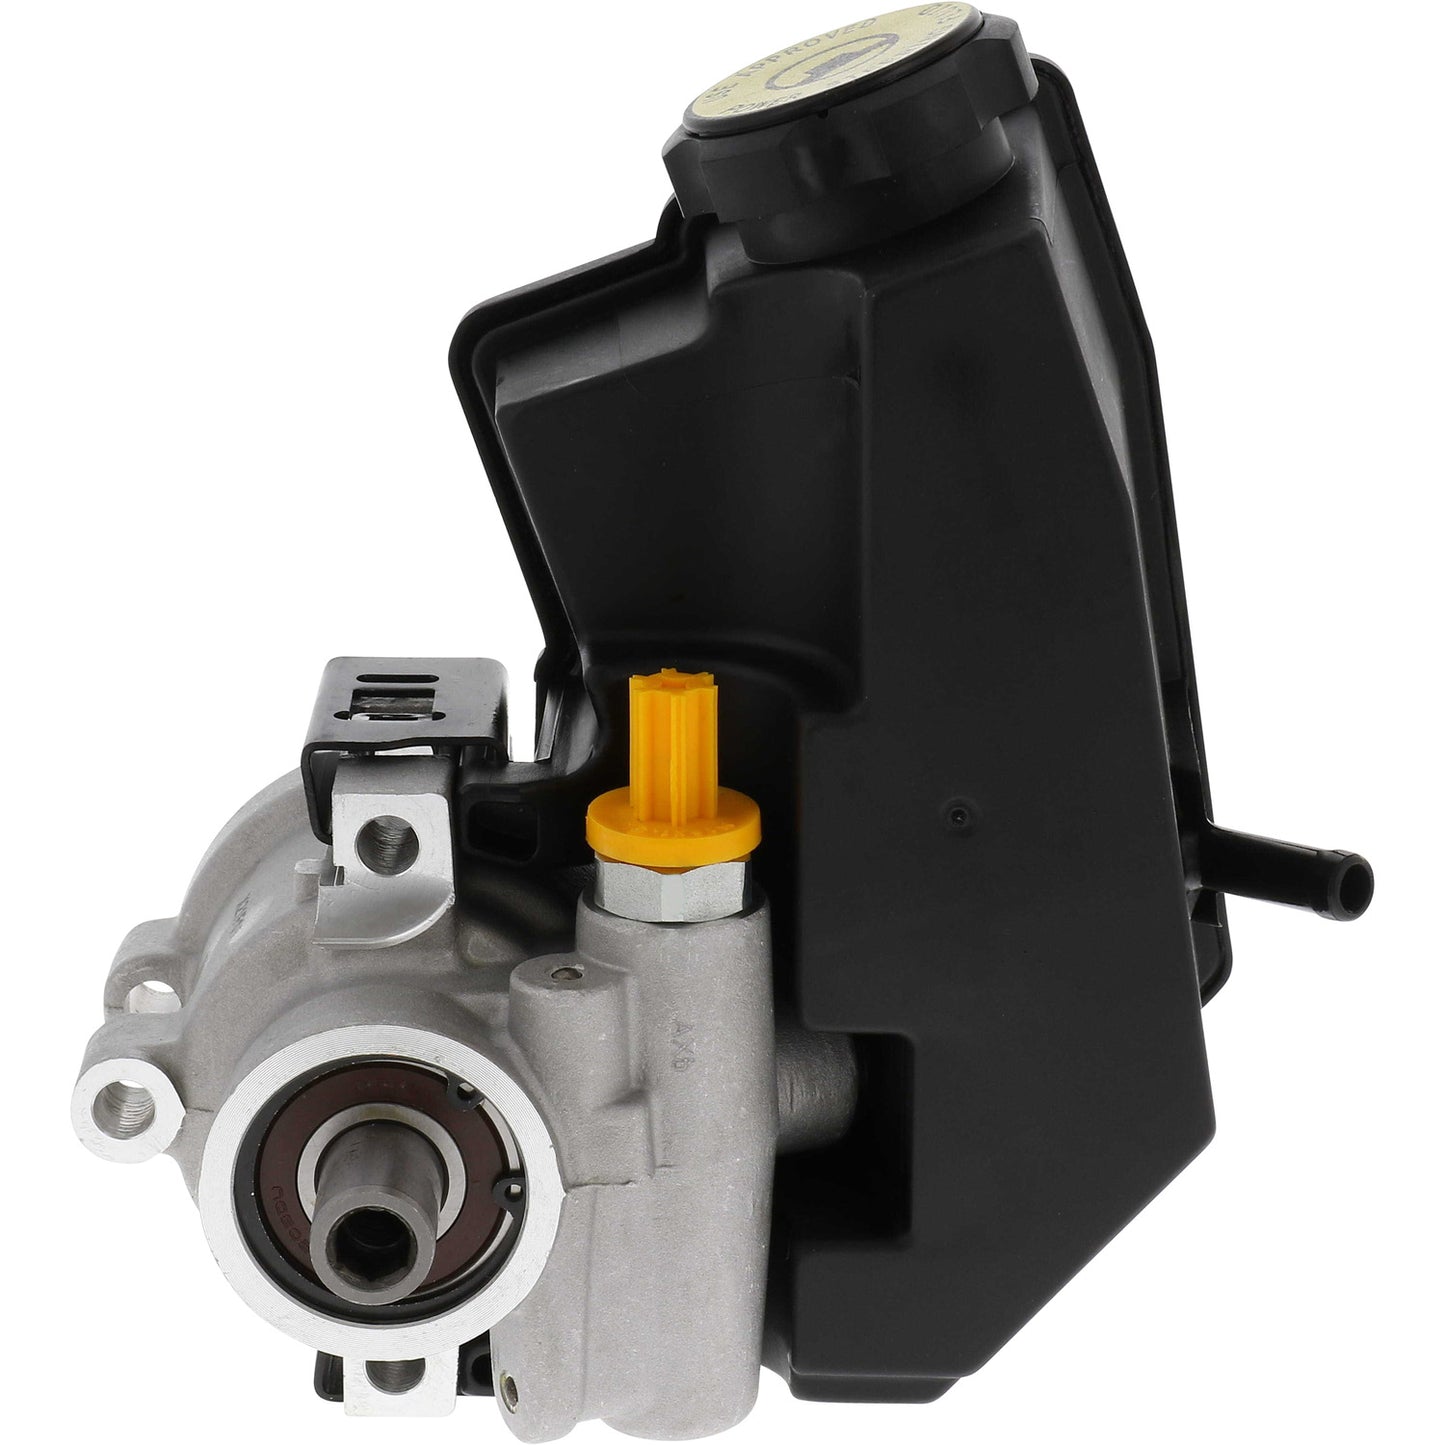 Power Steering Pump - Marathon HP - Hydraulic Power - New - 97305MN